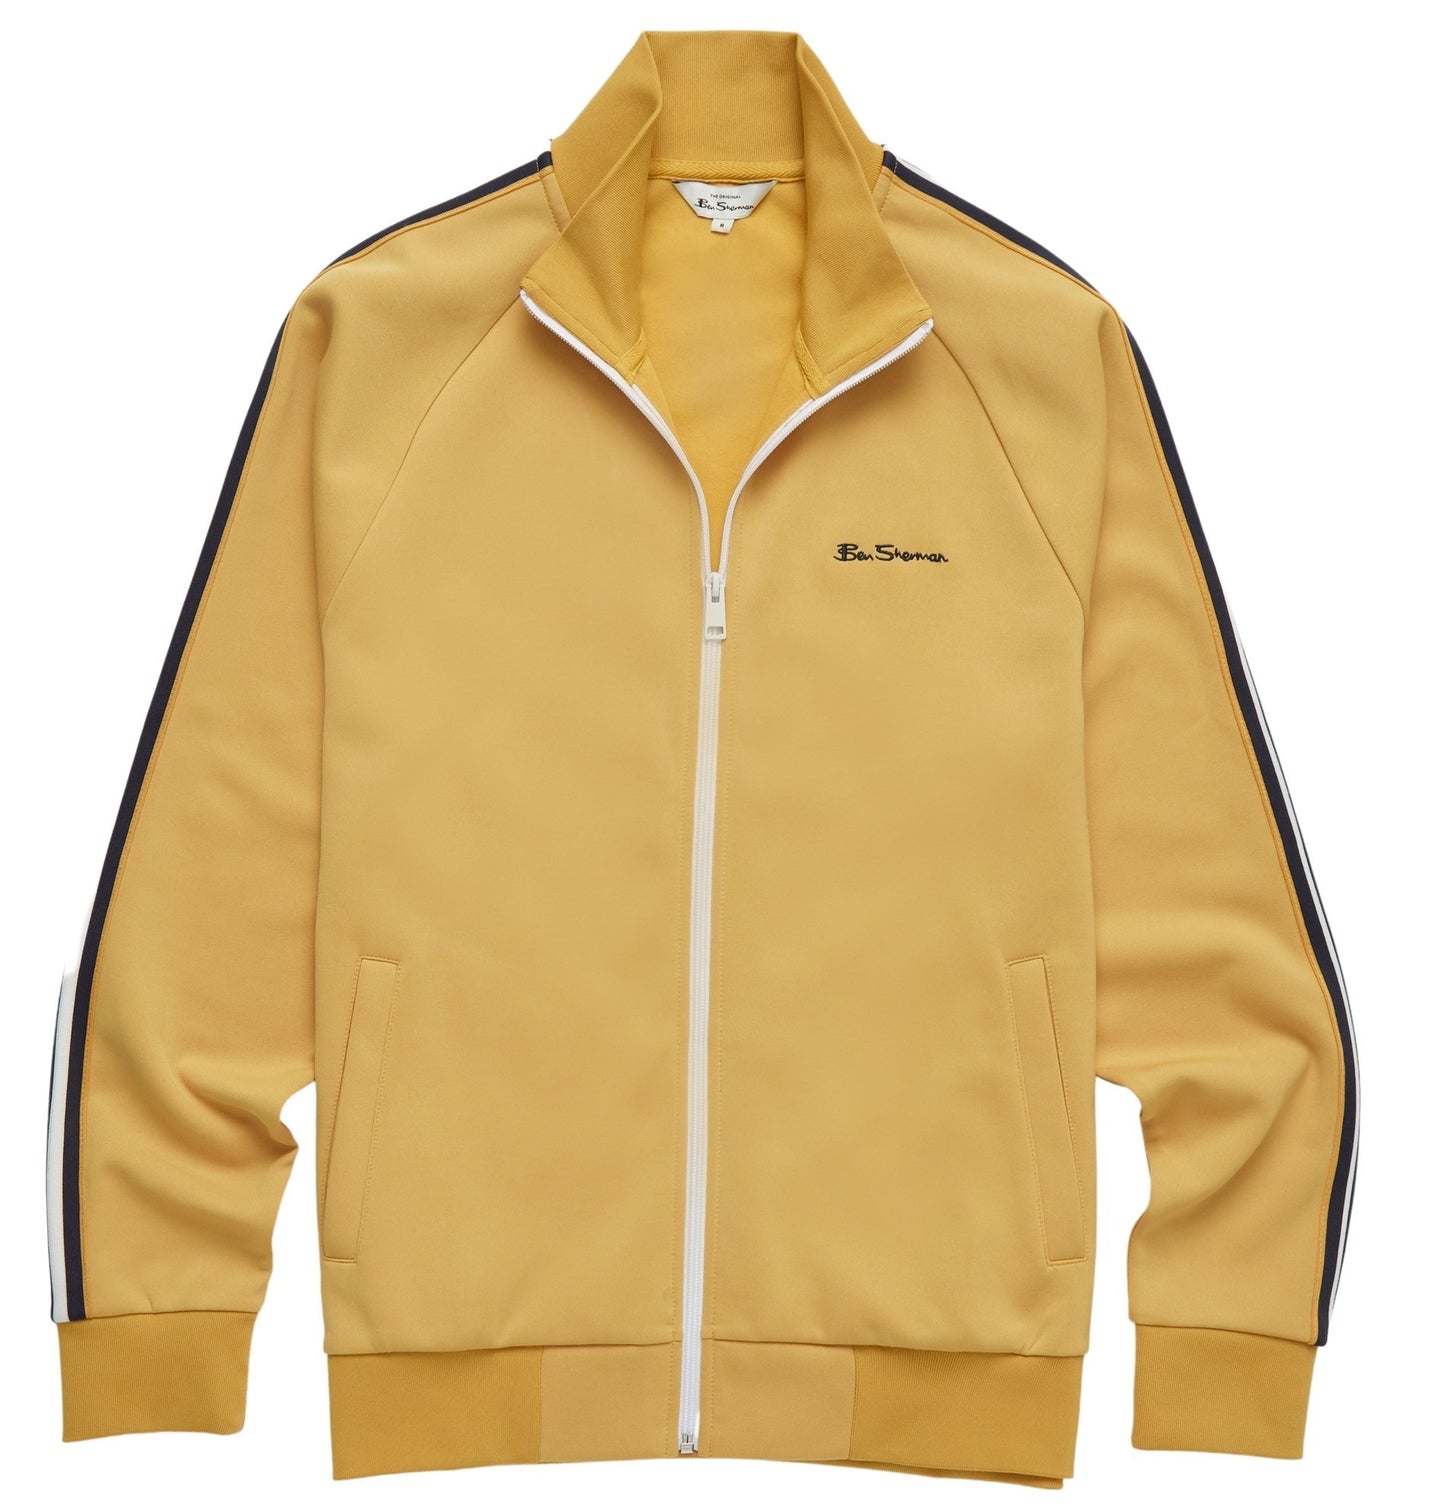 Ben Sherman Sunflower Yellow Striped Retro Track Top Jacket